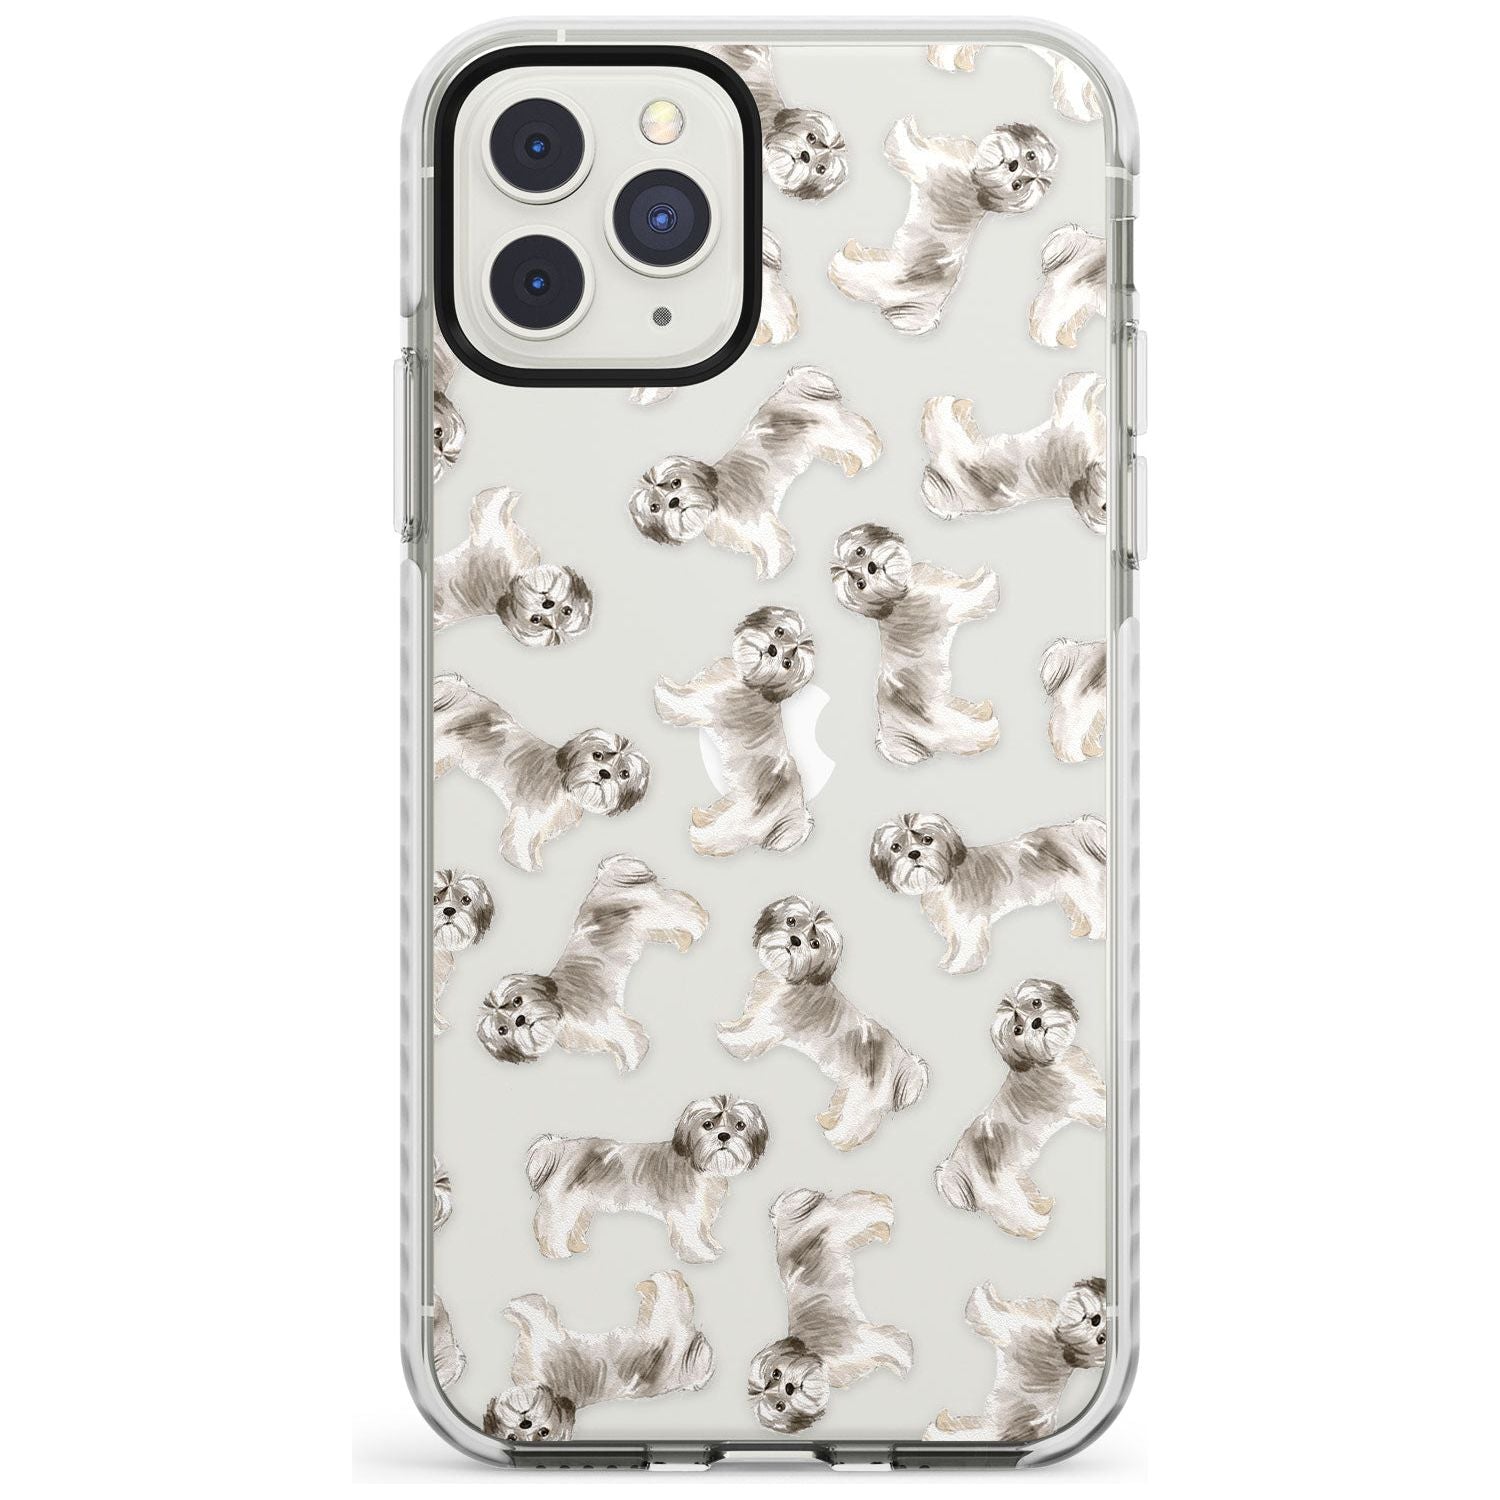 Shih tzu (Short Hair) Watercolour Dog Pattern Impact Phone Case for iPhone 11 Pro Max